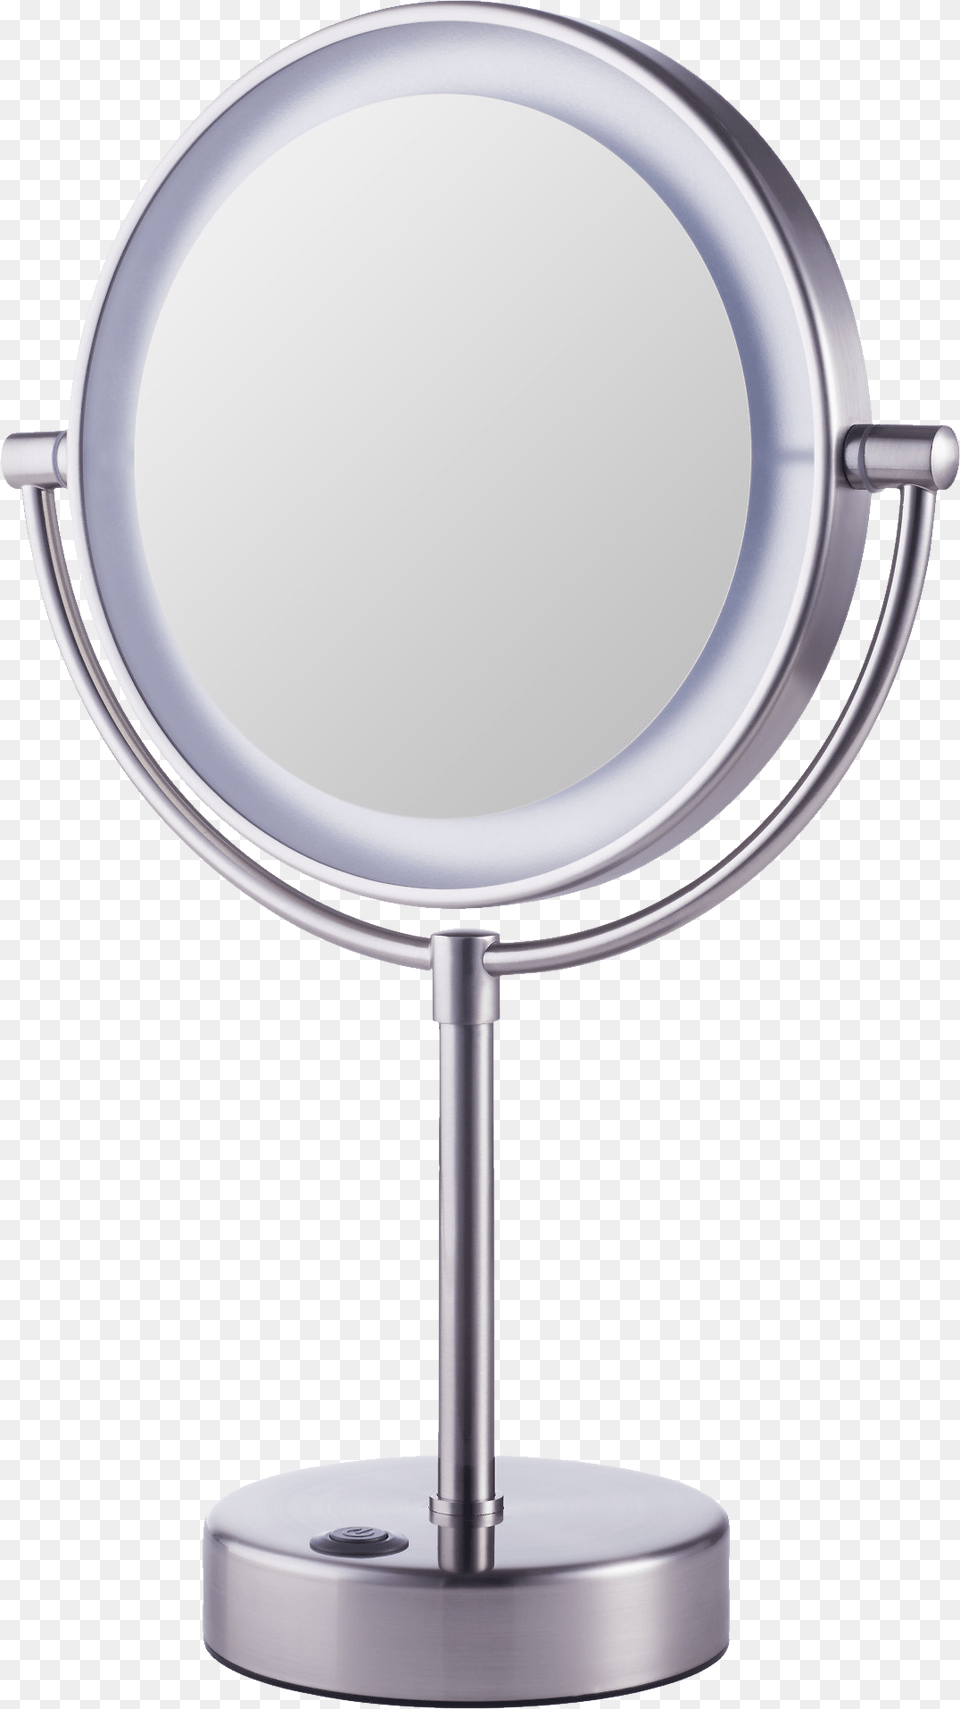 Grab And Mirror Image Makeup Mirror Background, Smoke Pipe Free Transparent Png